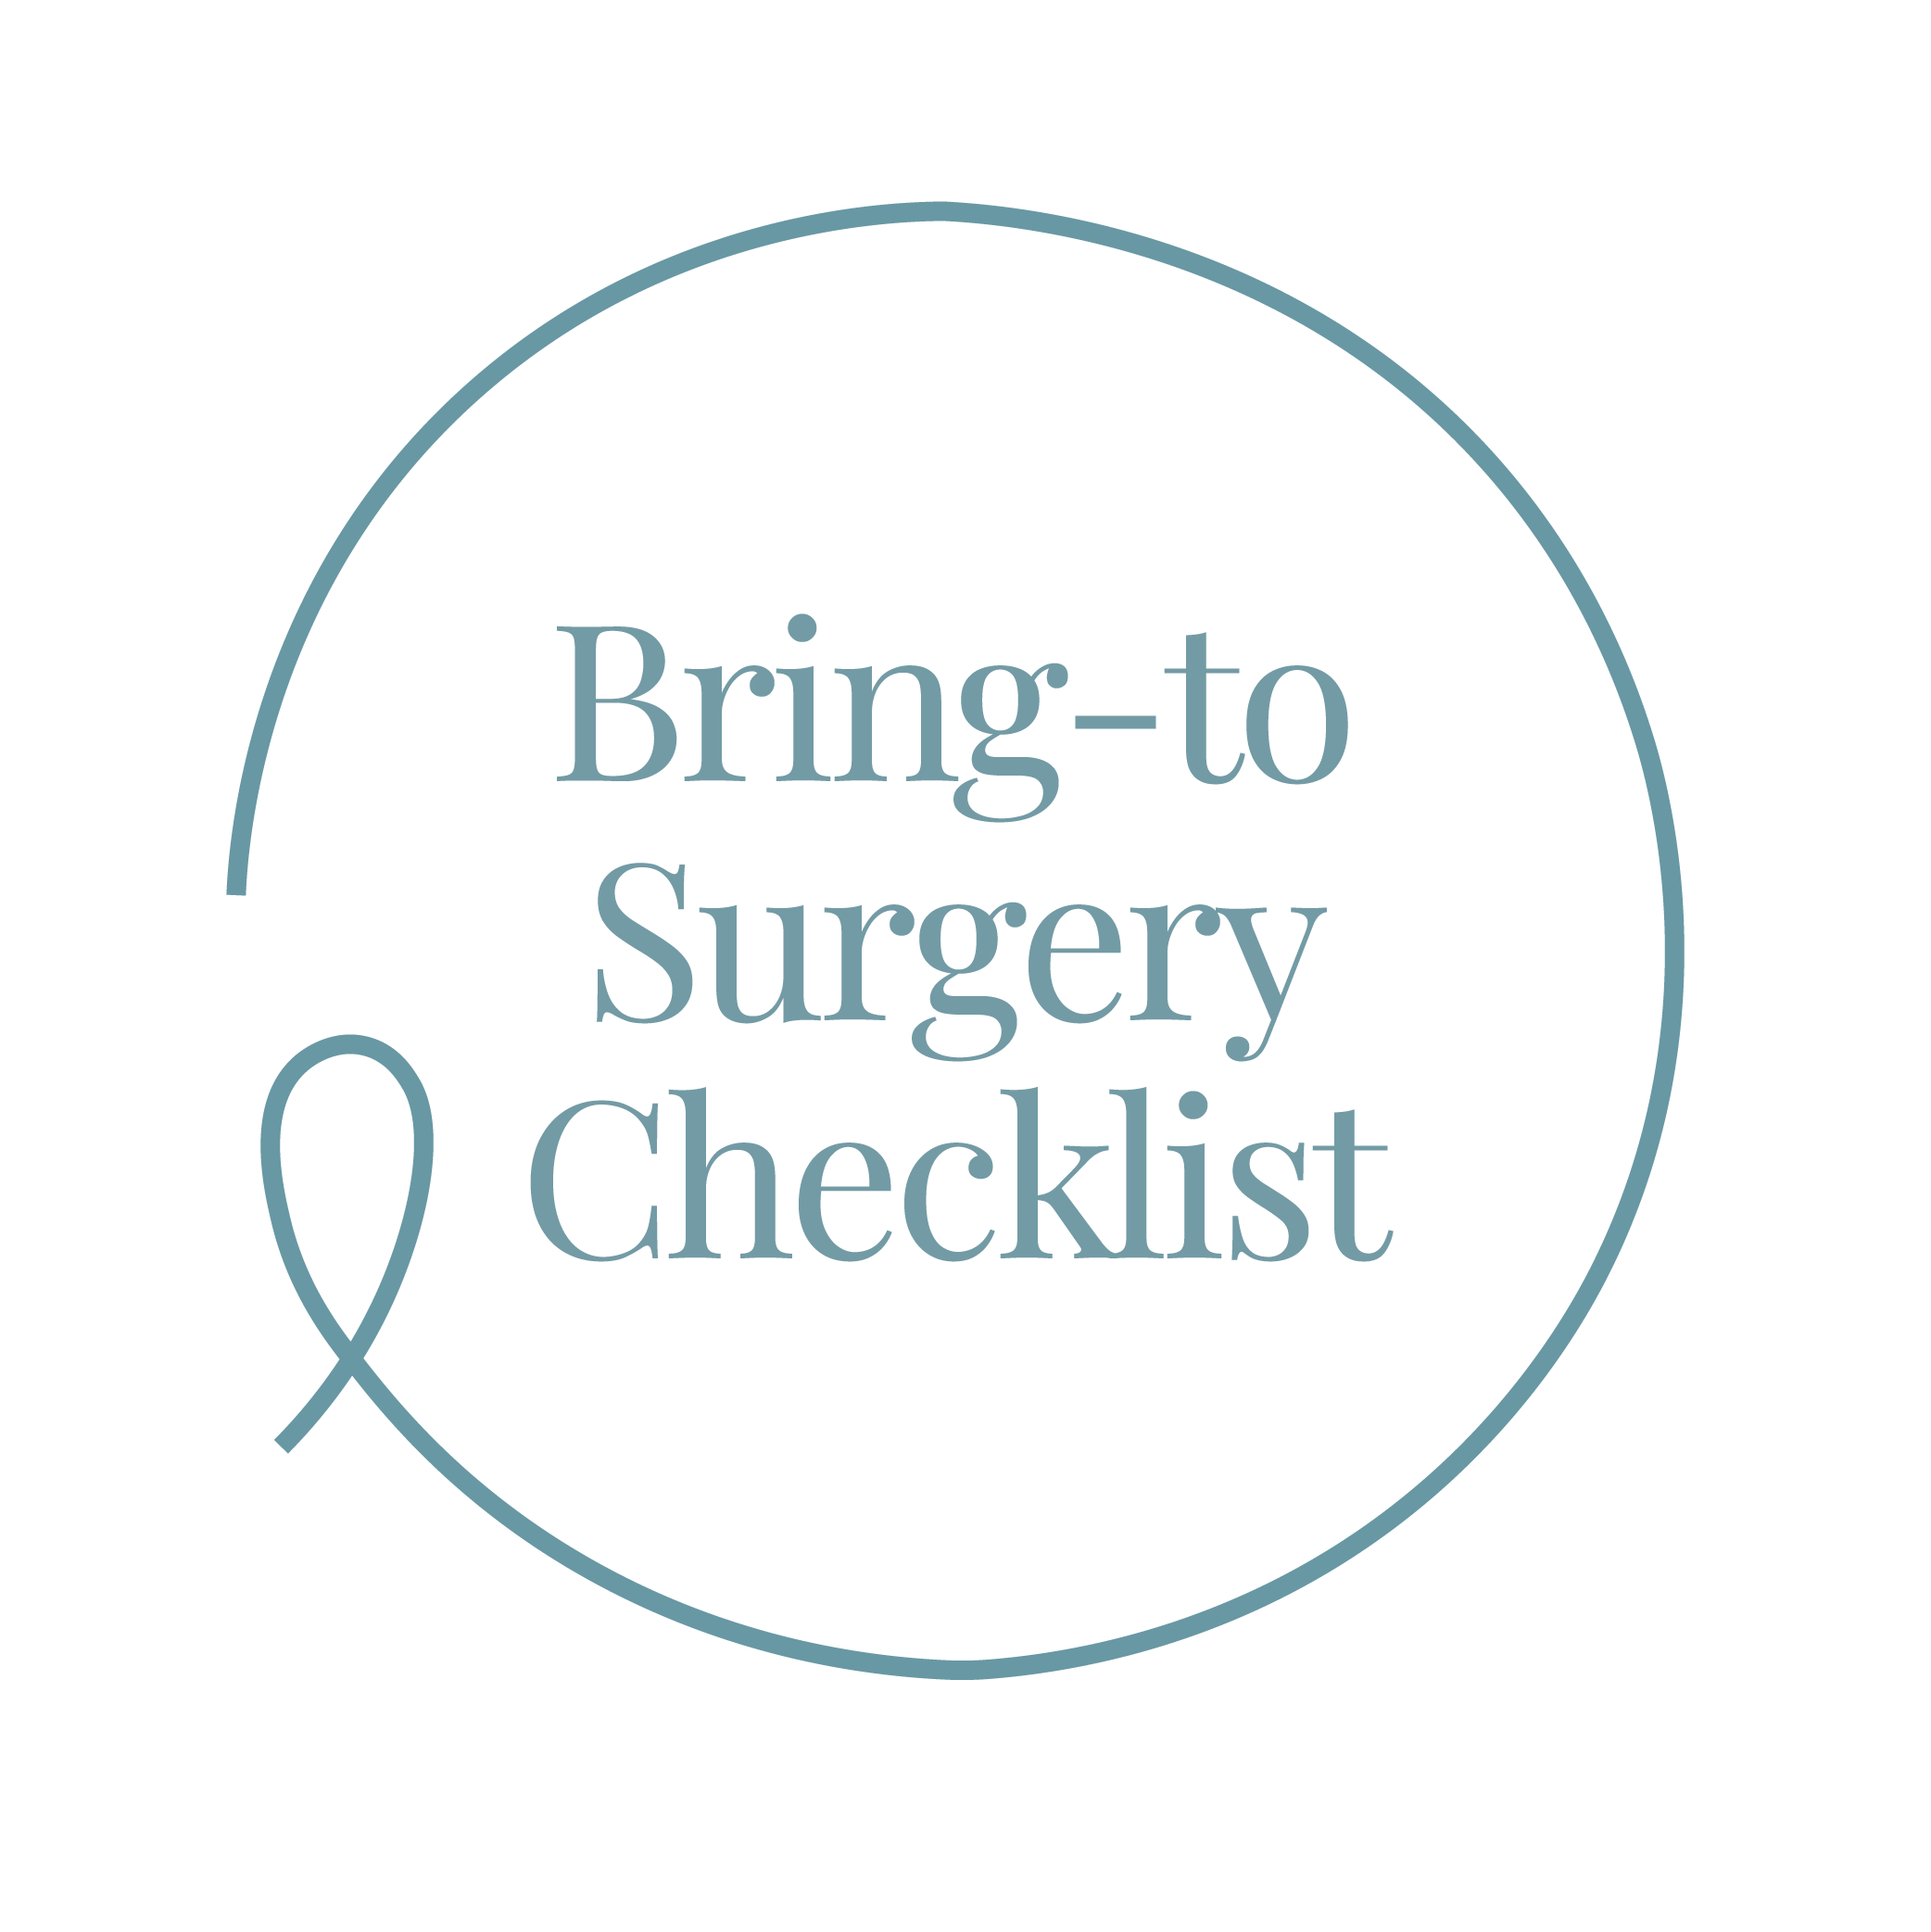 Bring-to-Surgery Checklist